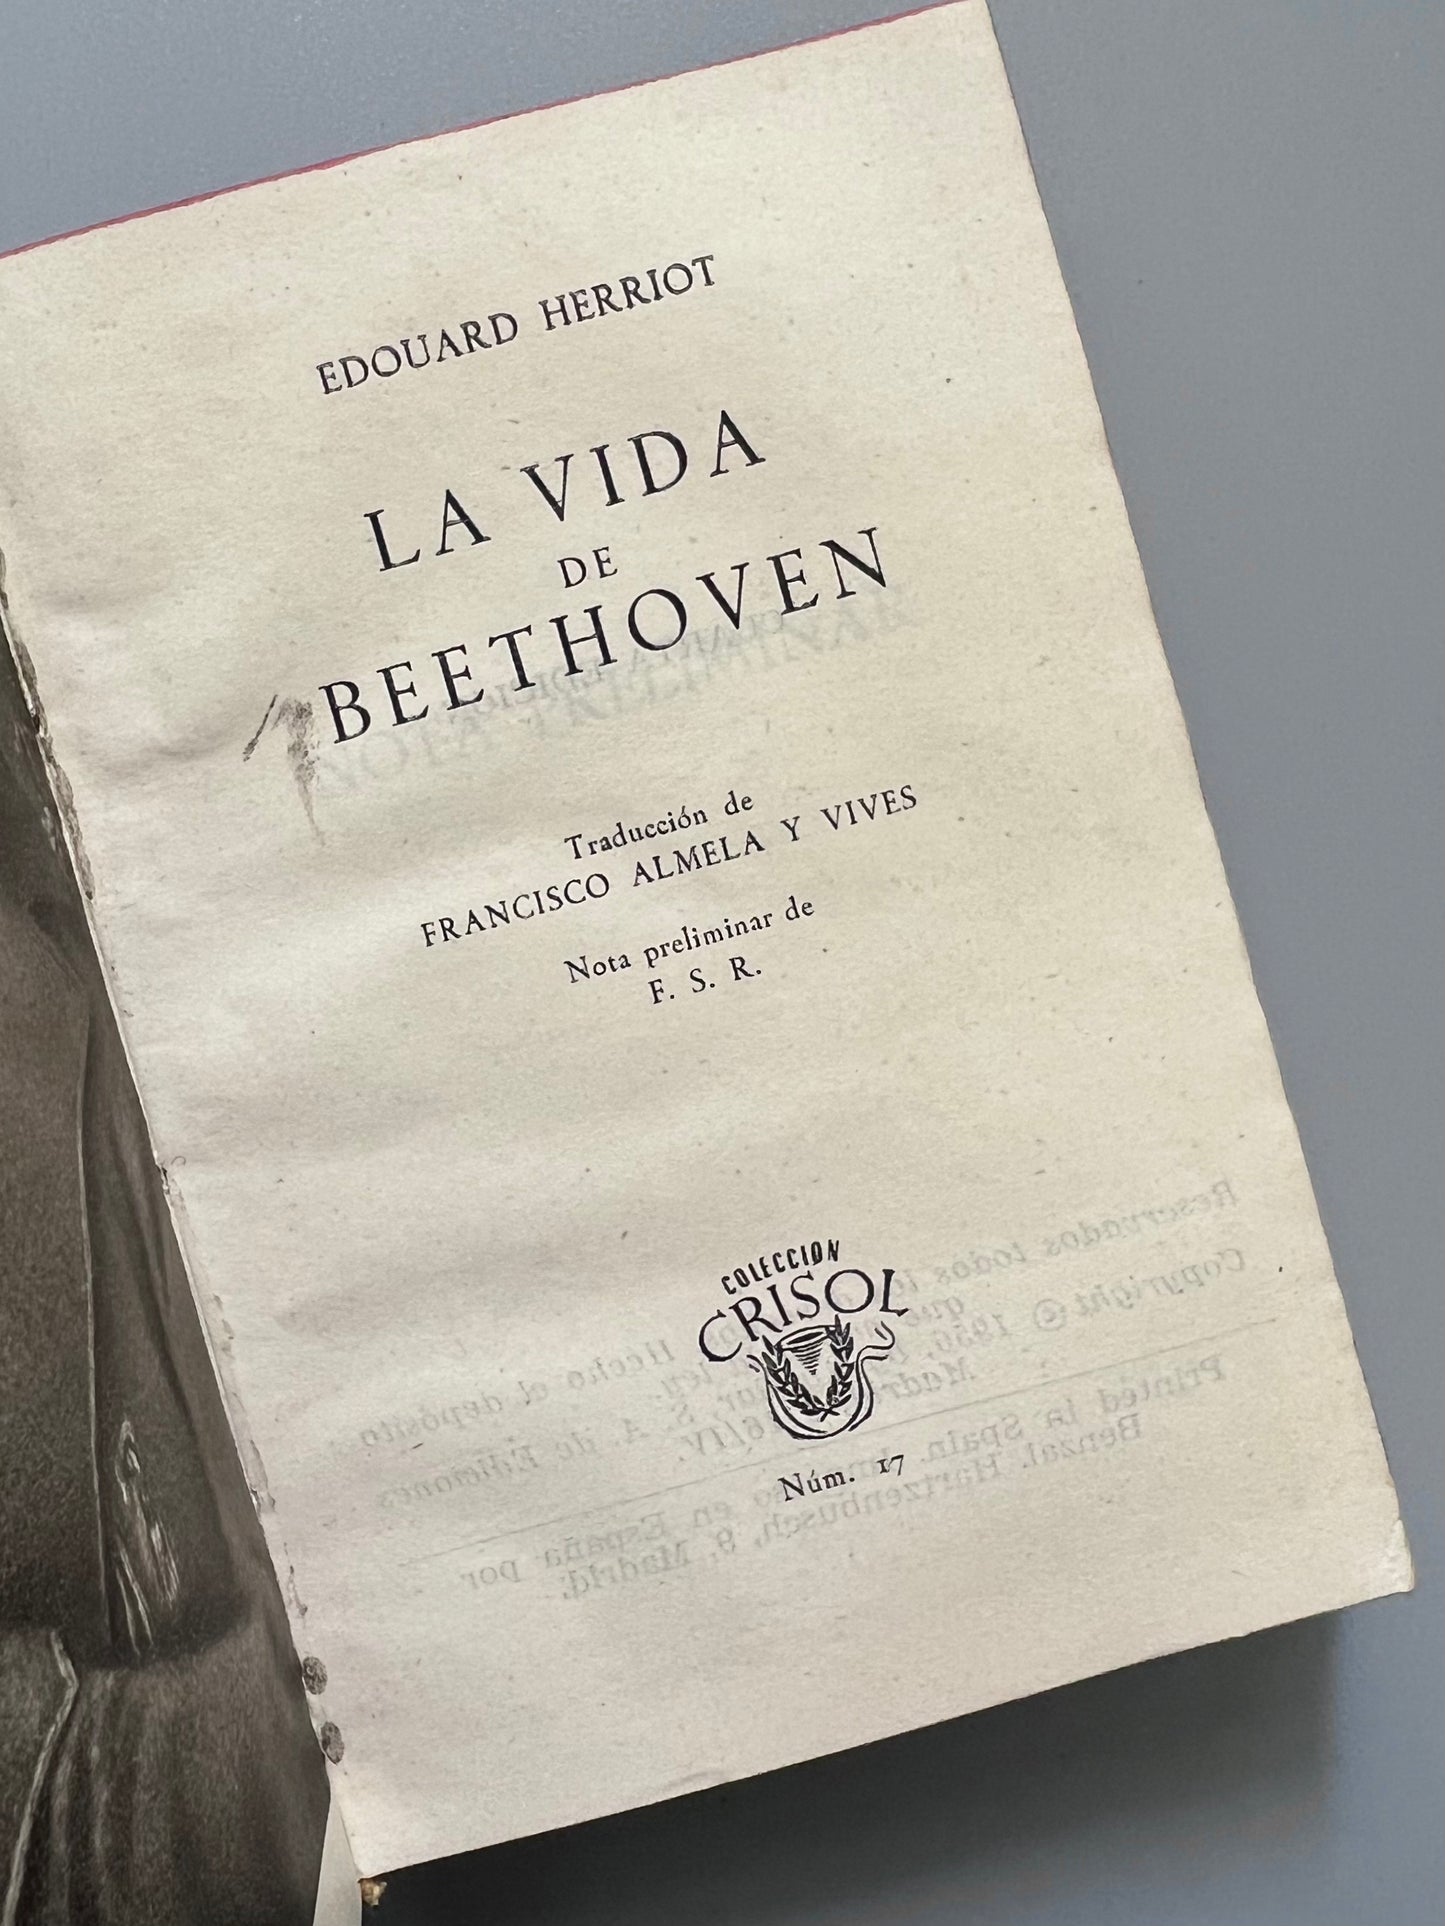 La vida de Beethoven, Edouard Herriot - Colección Crisol nº17, 1956